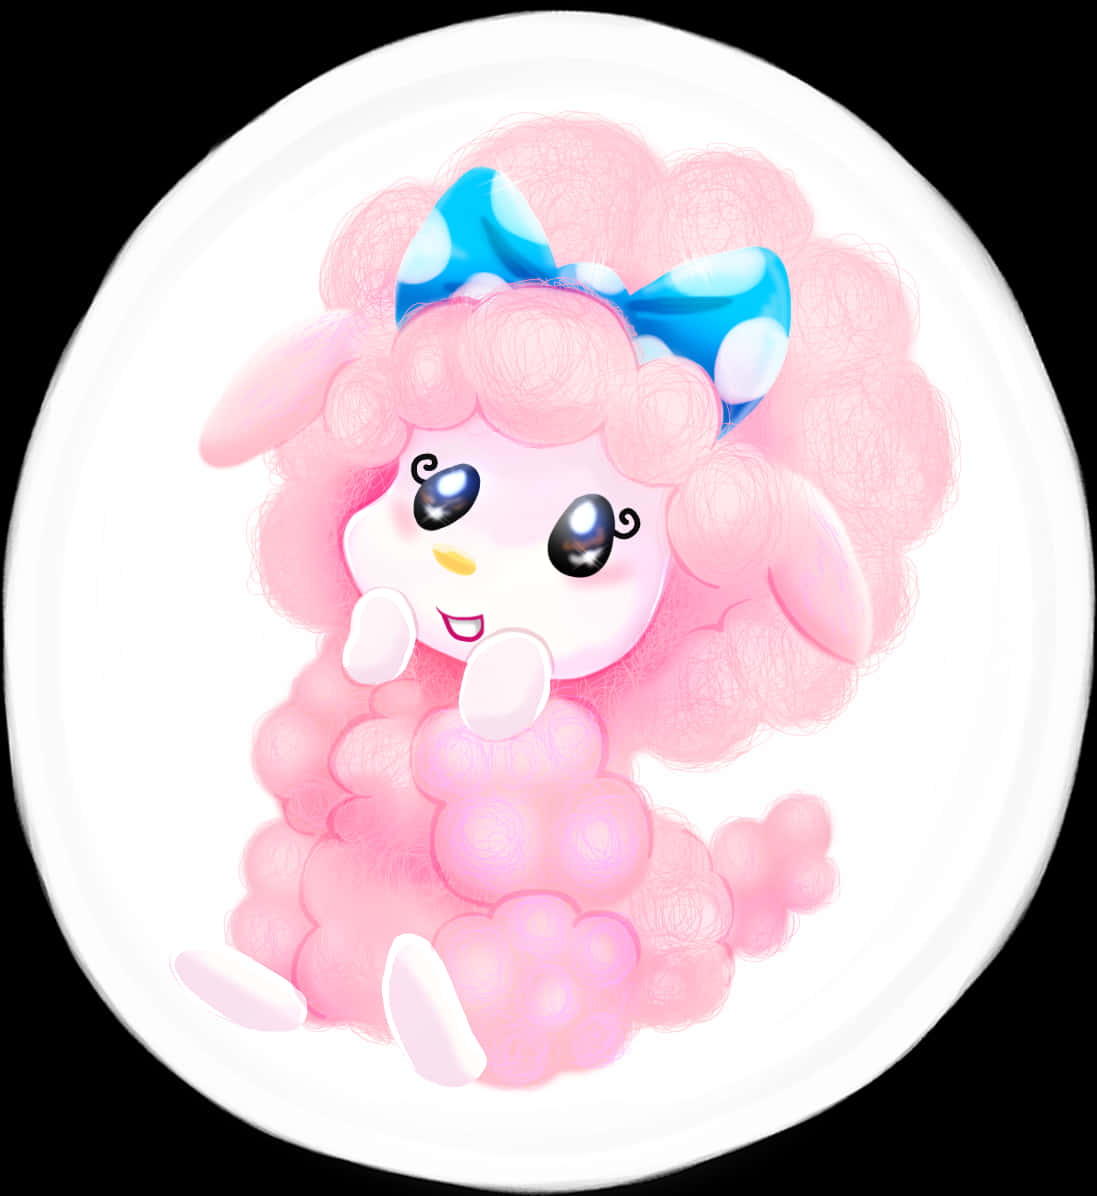 A Cartoon Of A Pink Fluffy Animal